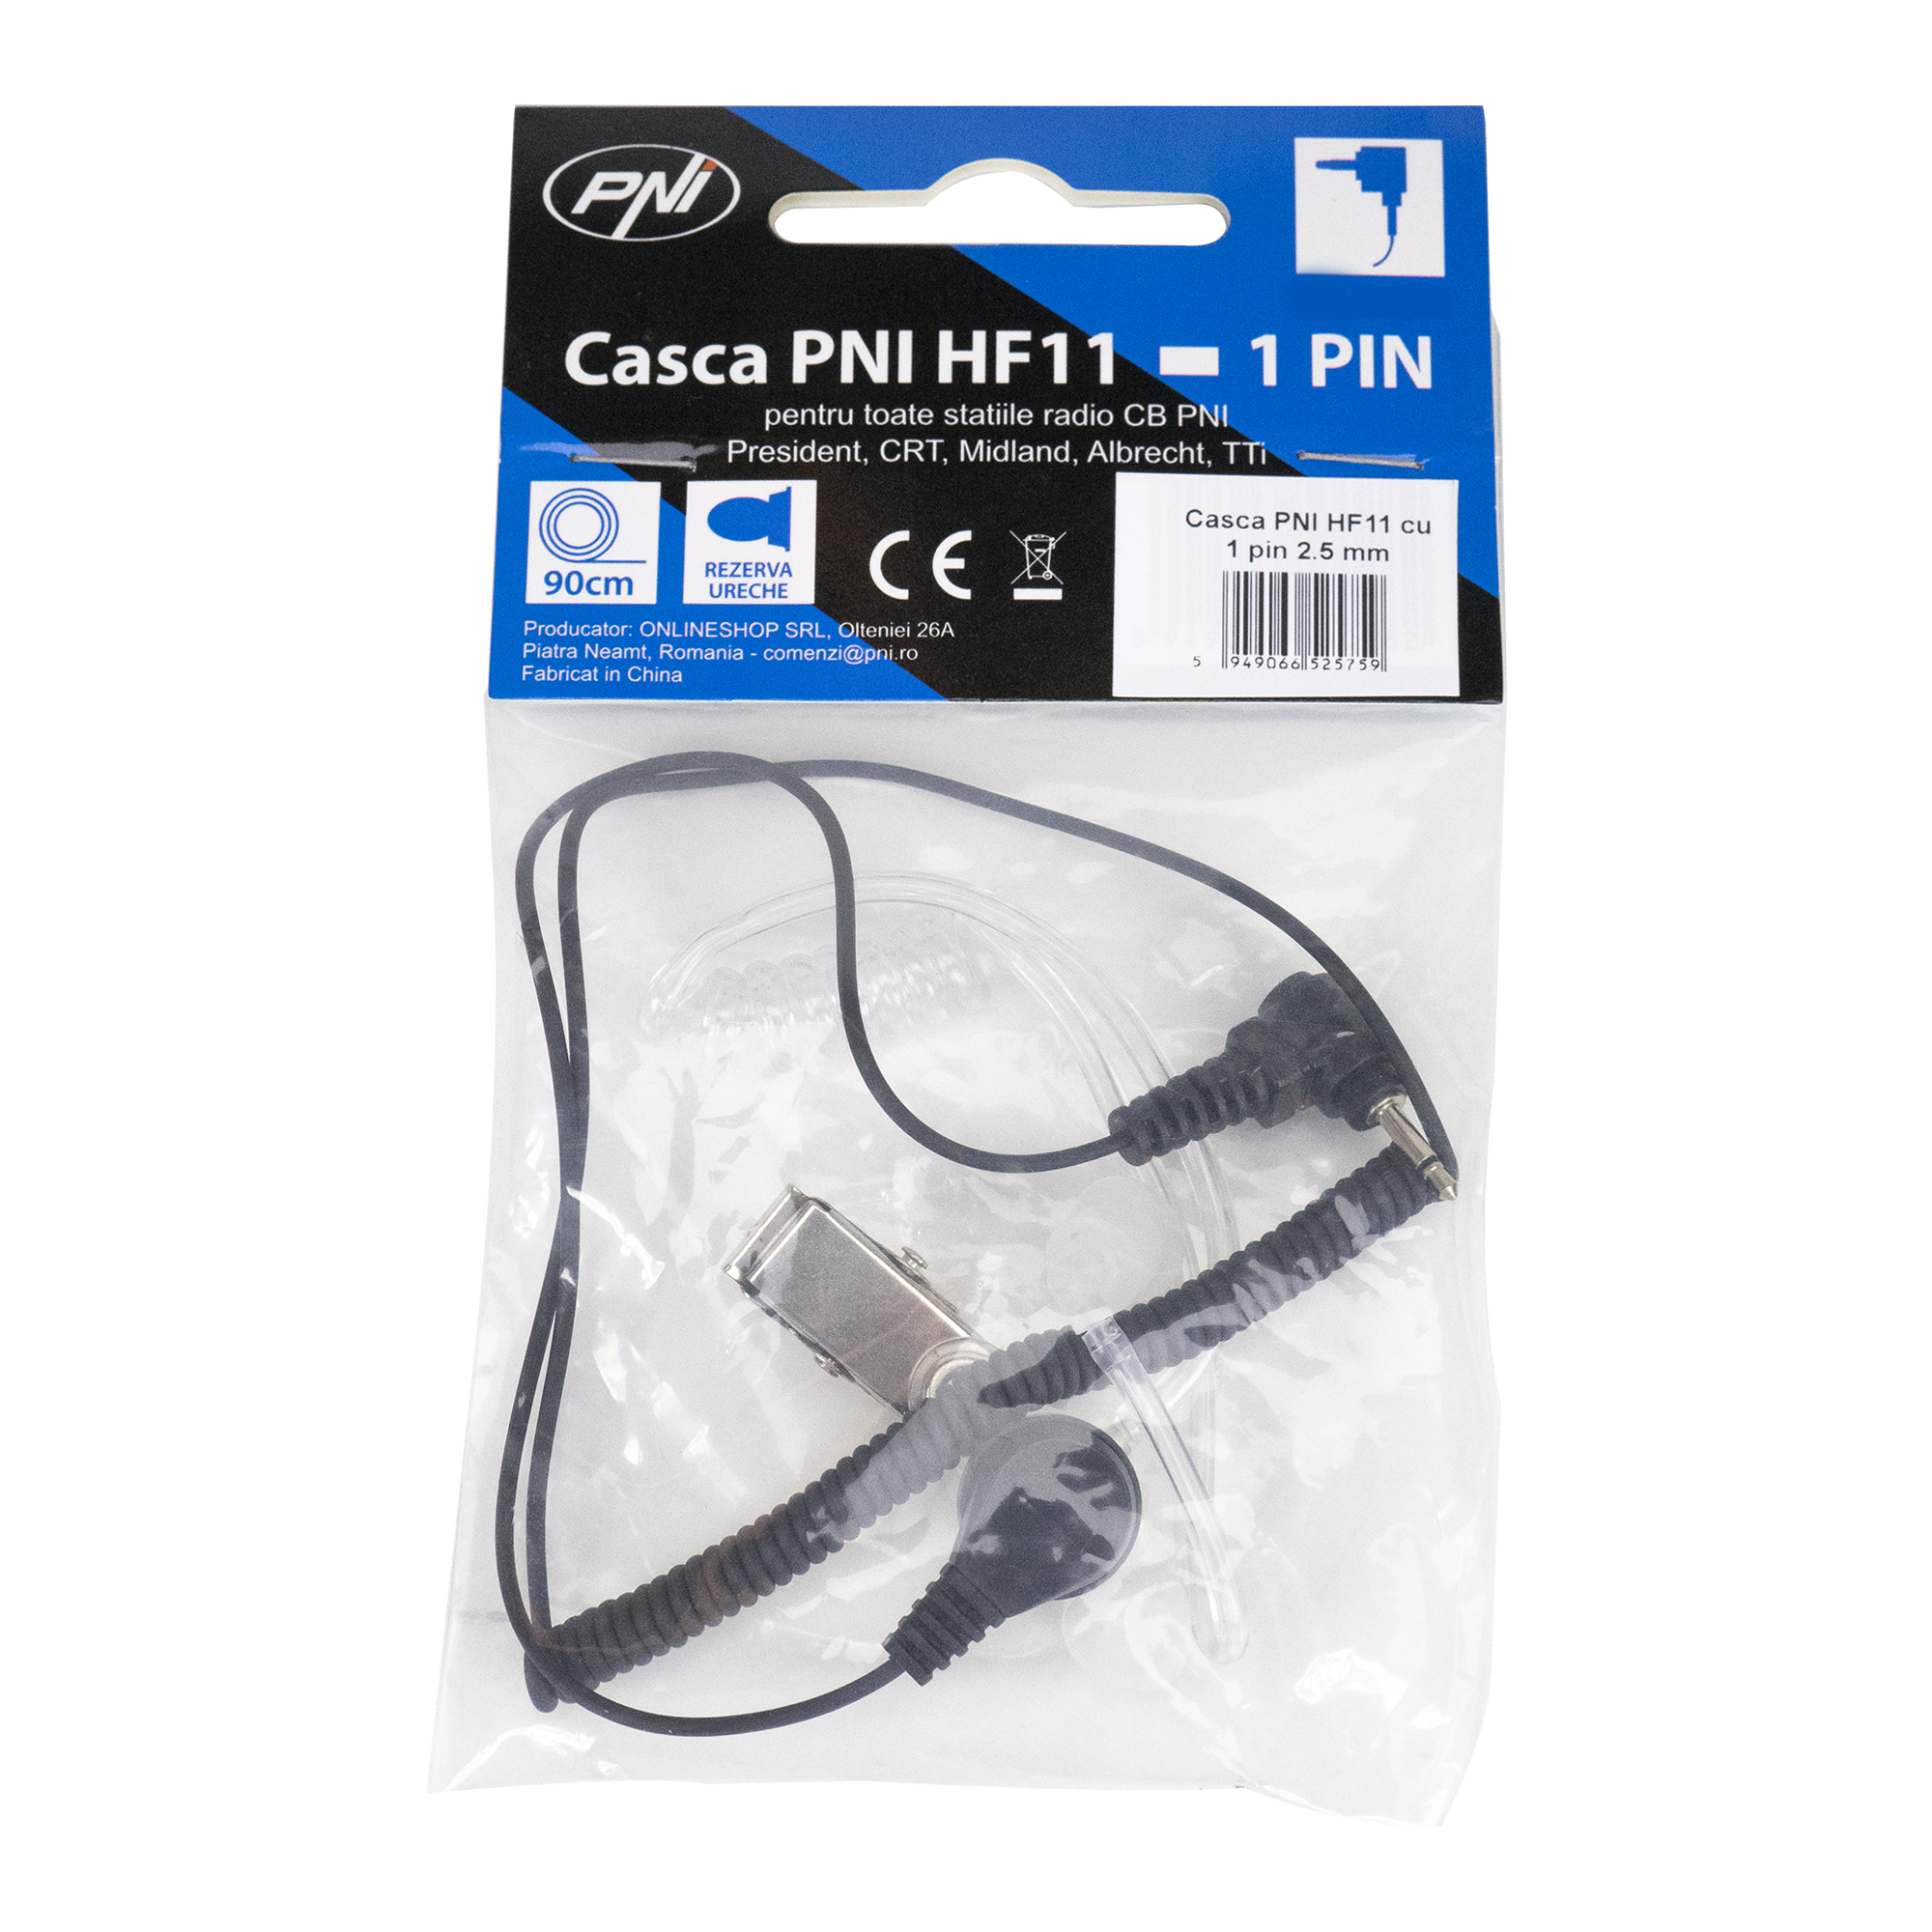 Casca PNI HF11 cu 1 pin 2.5 mm, tub acustic, pentru toate statiile radio PNI imagine noua 2022